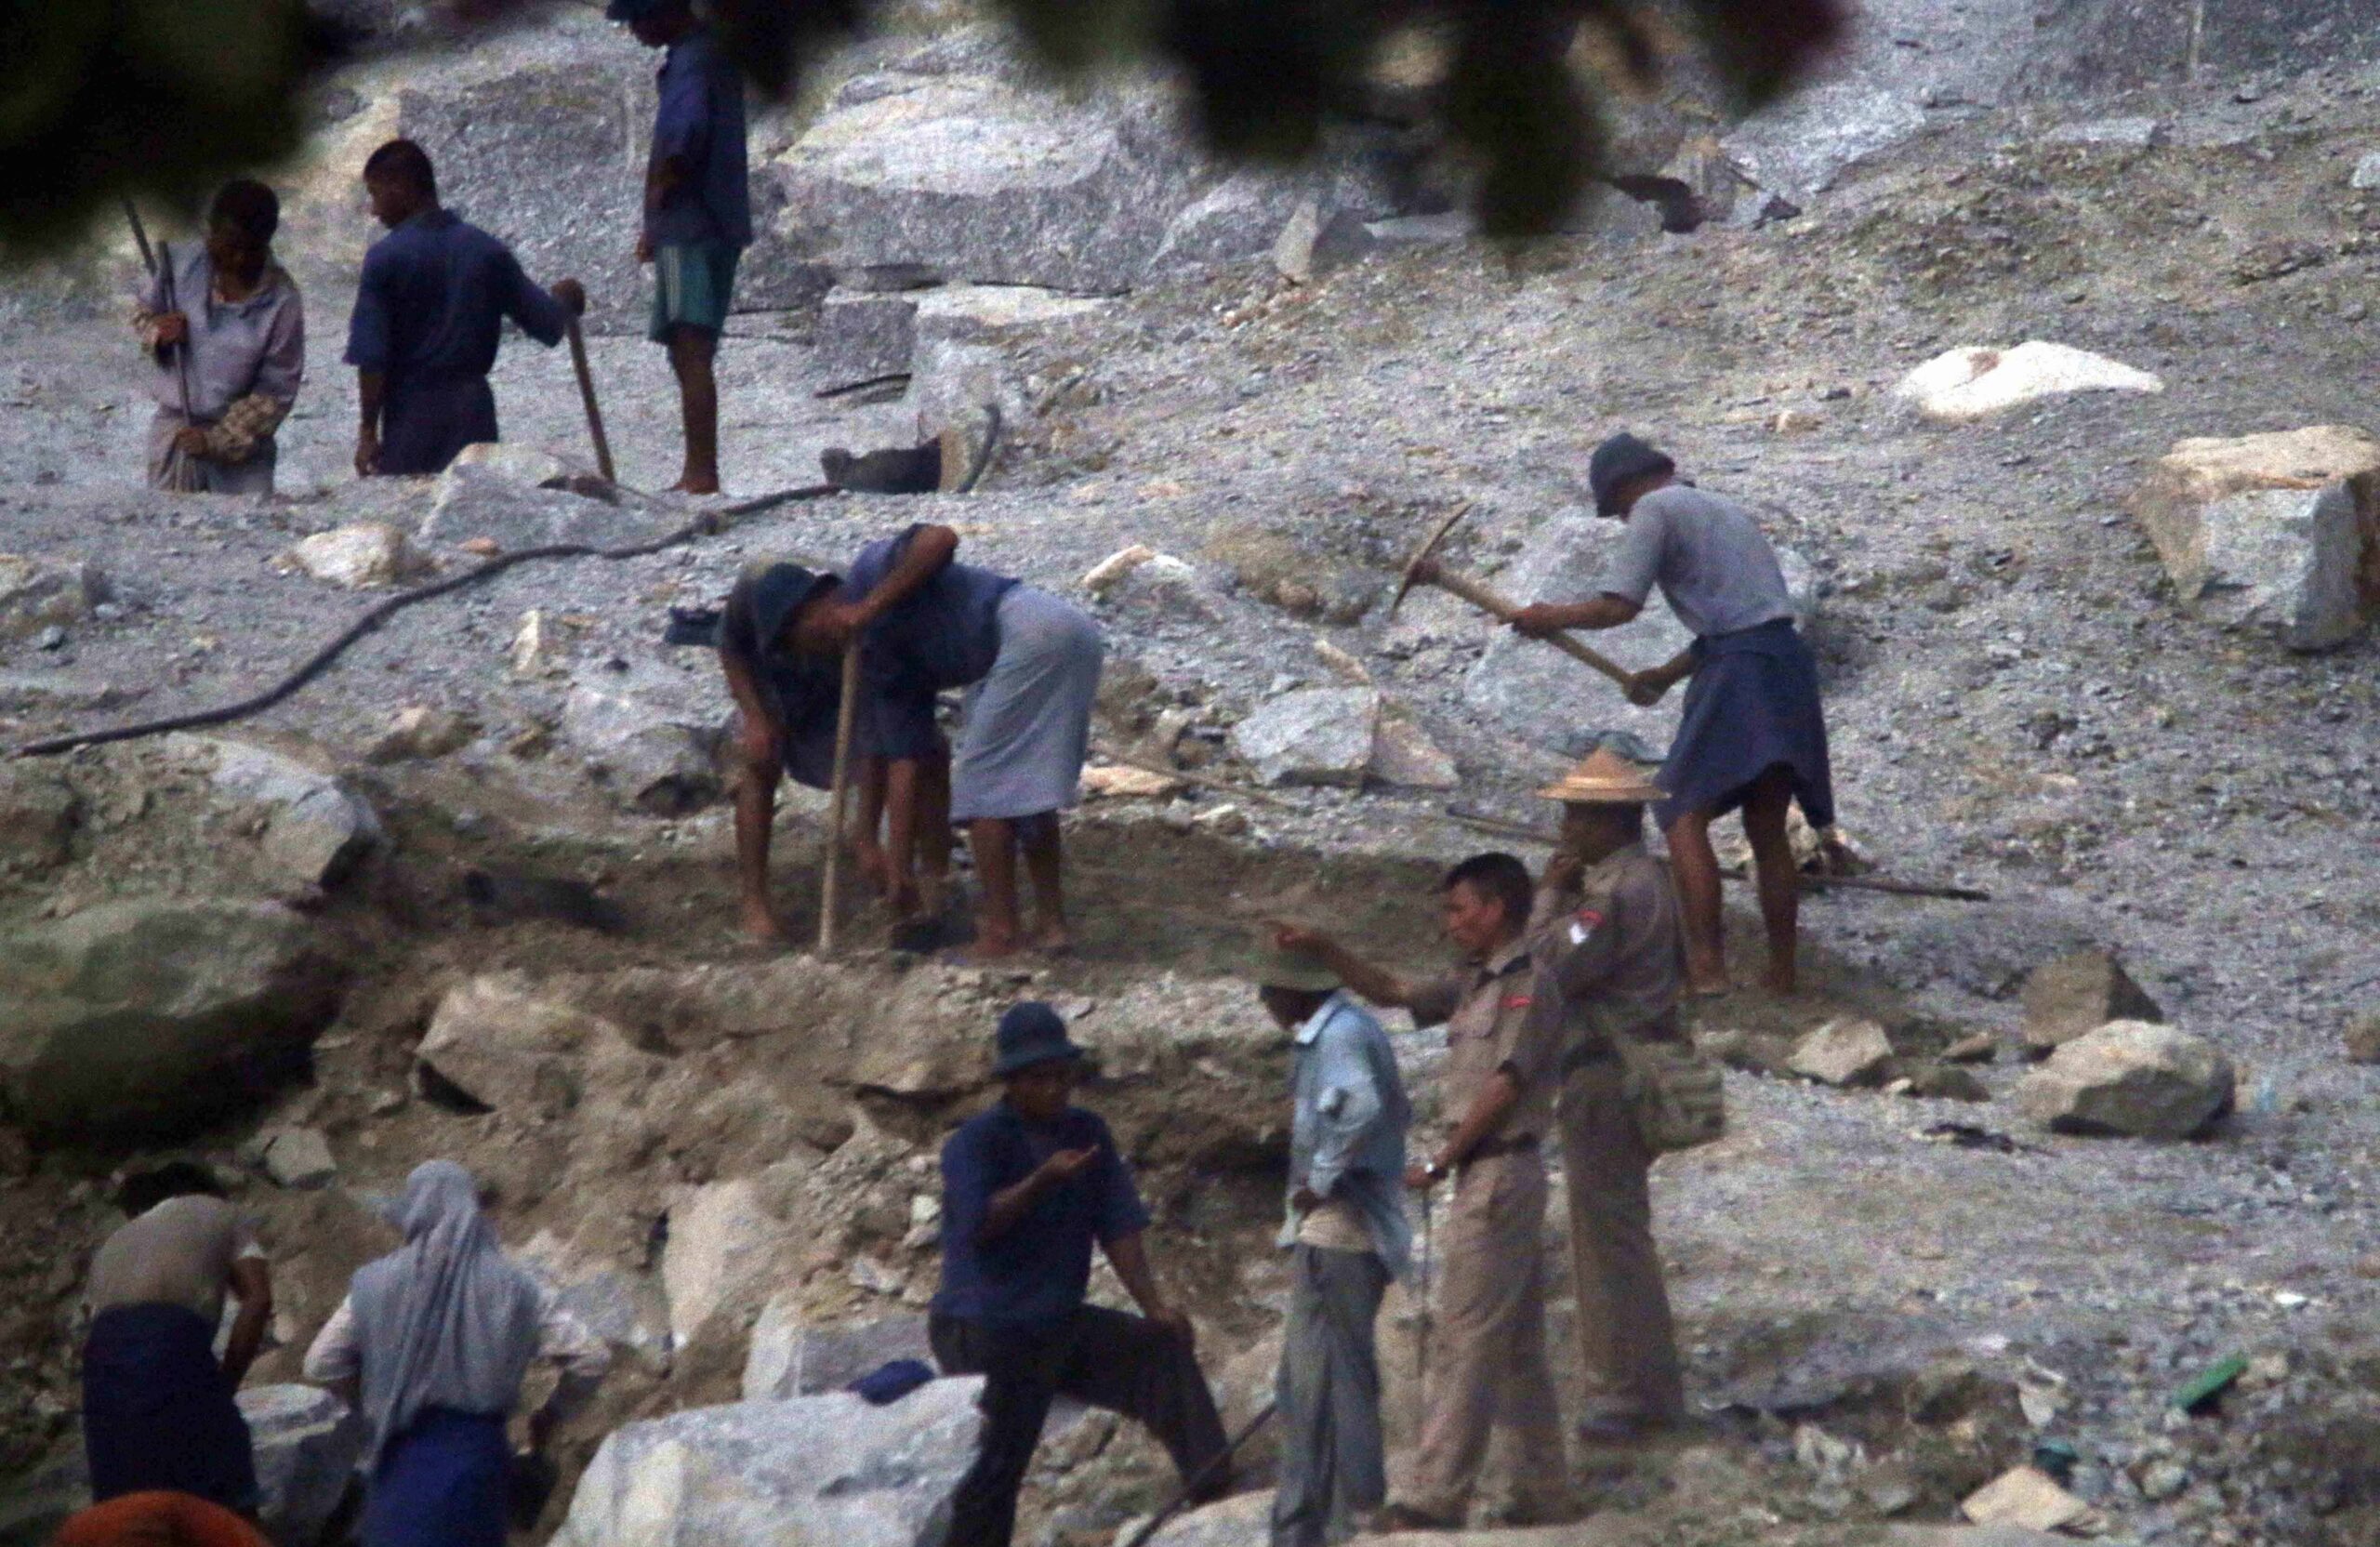 Prision laborers break rock in a quarry